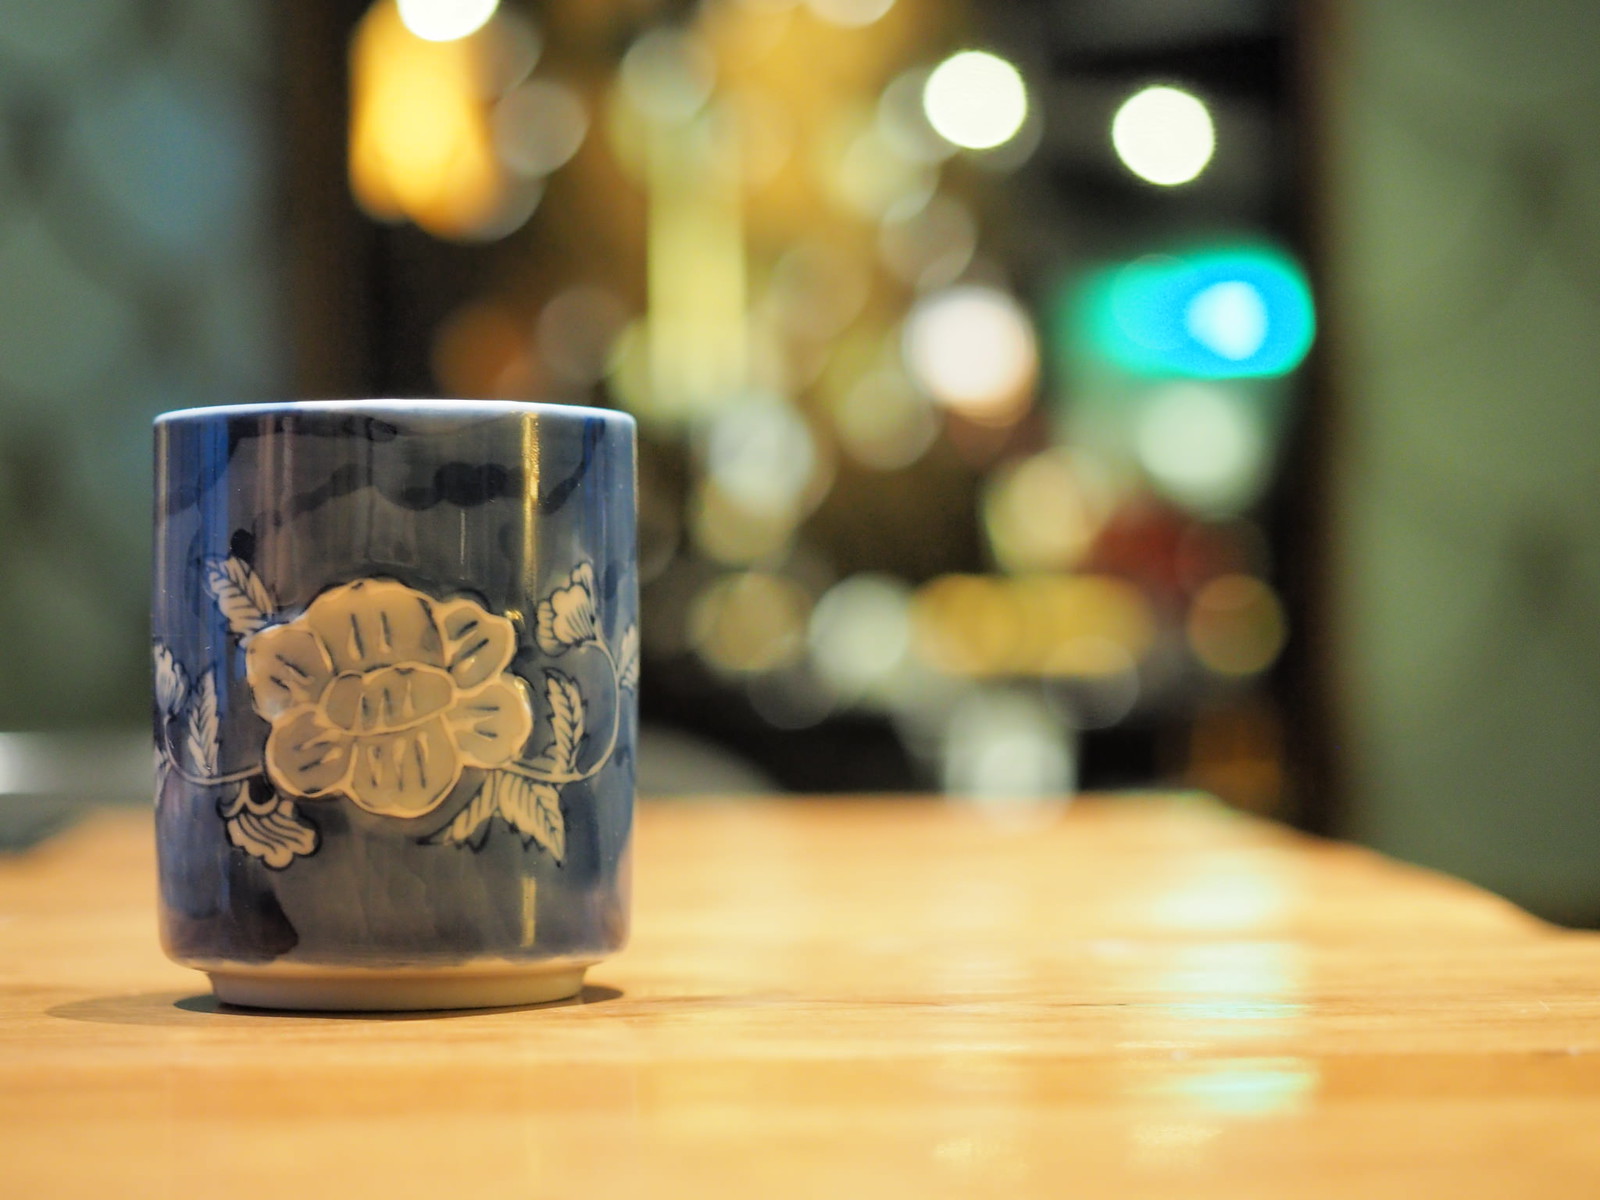 The tea cup at Uroko Japanese Cuisine at Section 17, Petaling Jaya